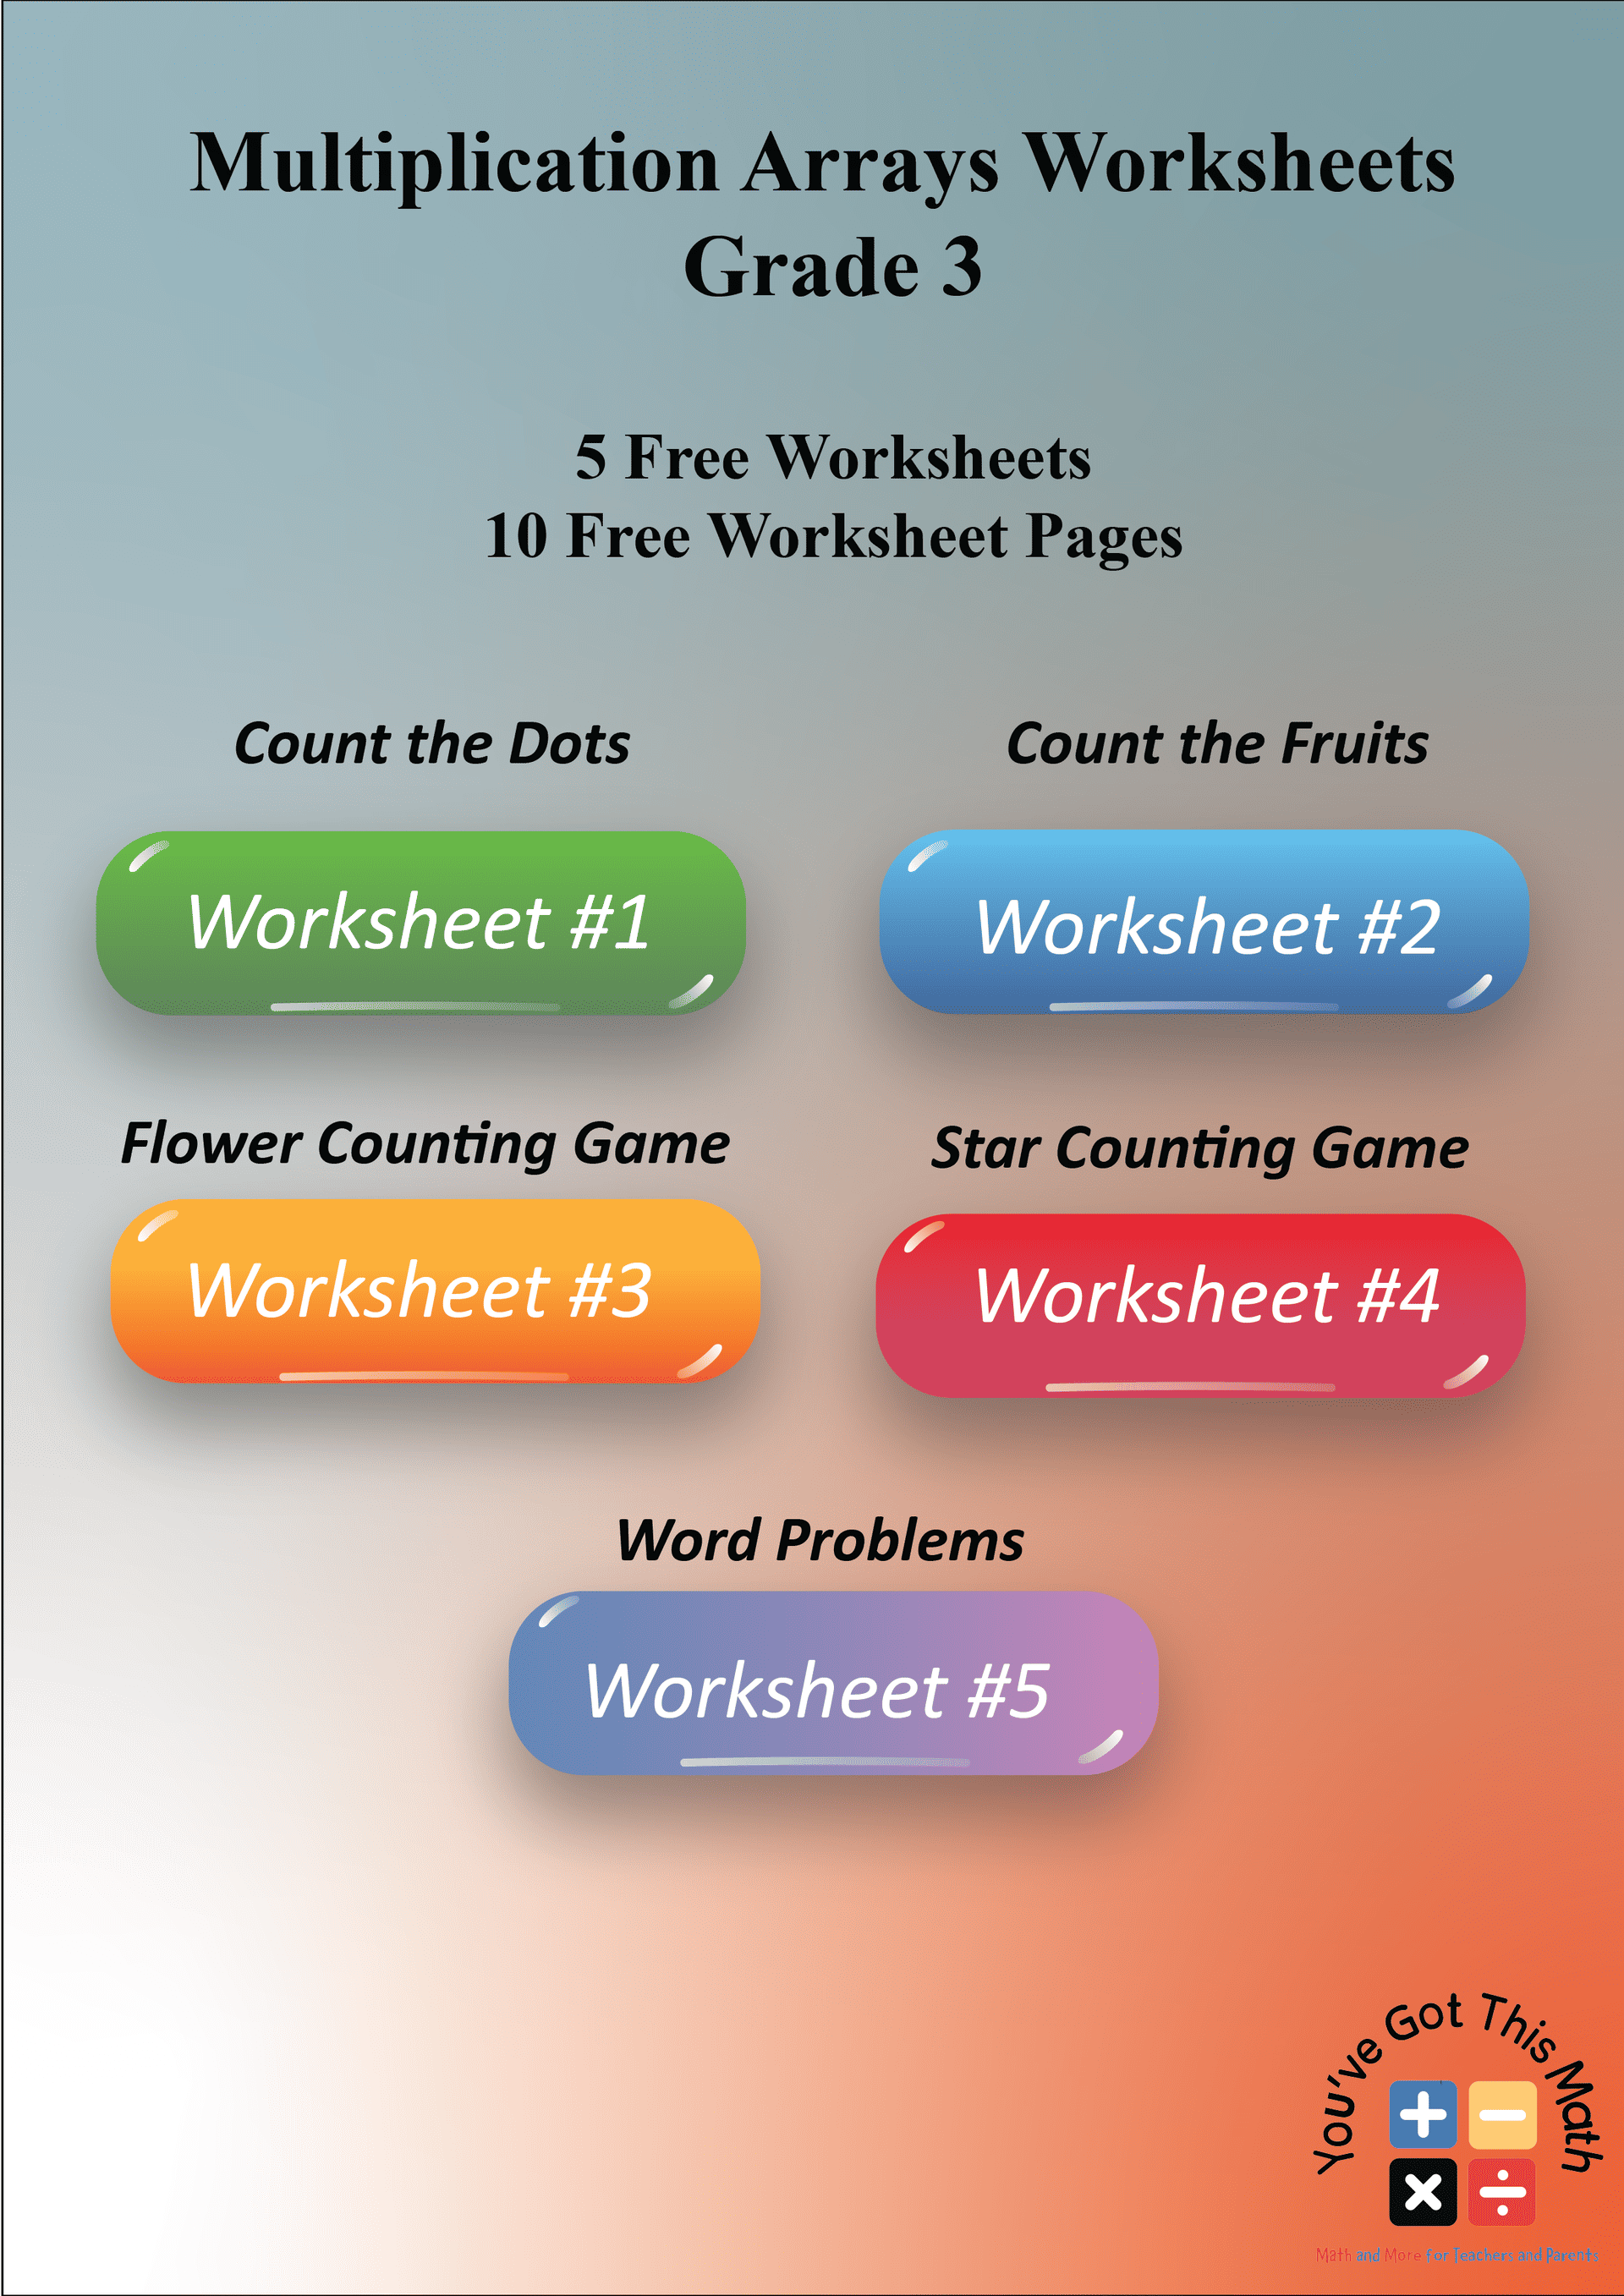 5 Multiplication Arrays Worksheets Grade 3